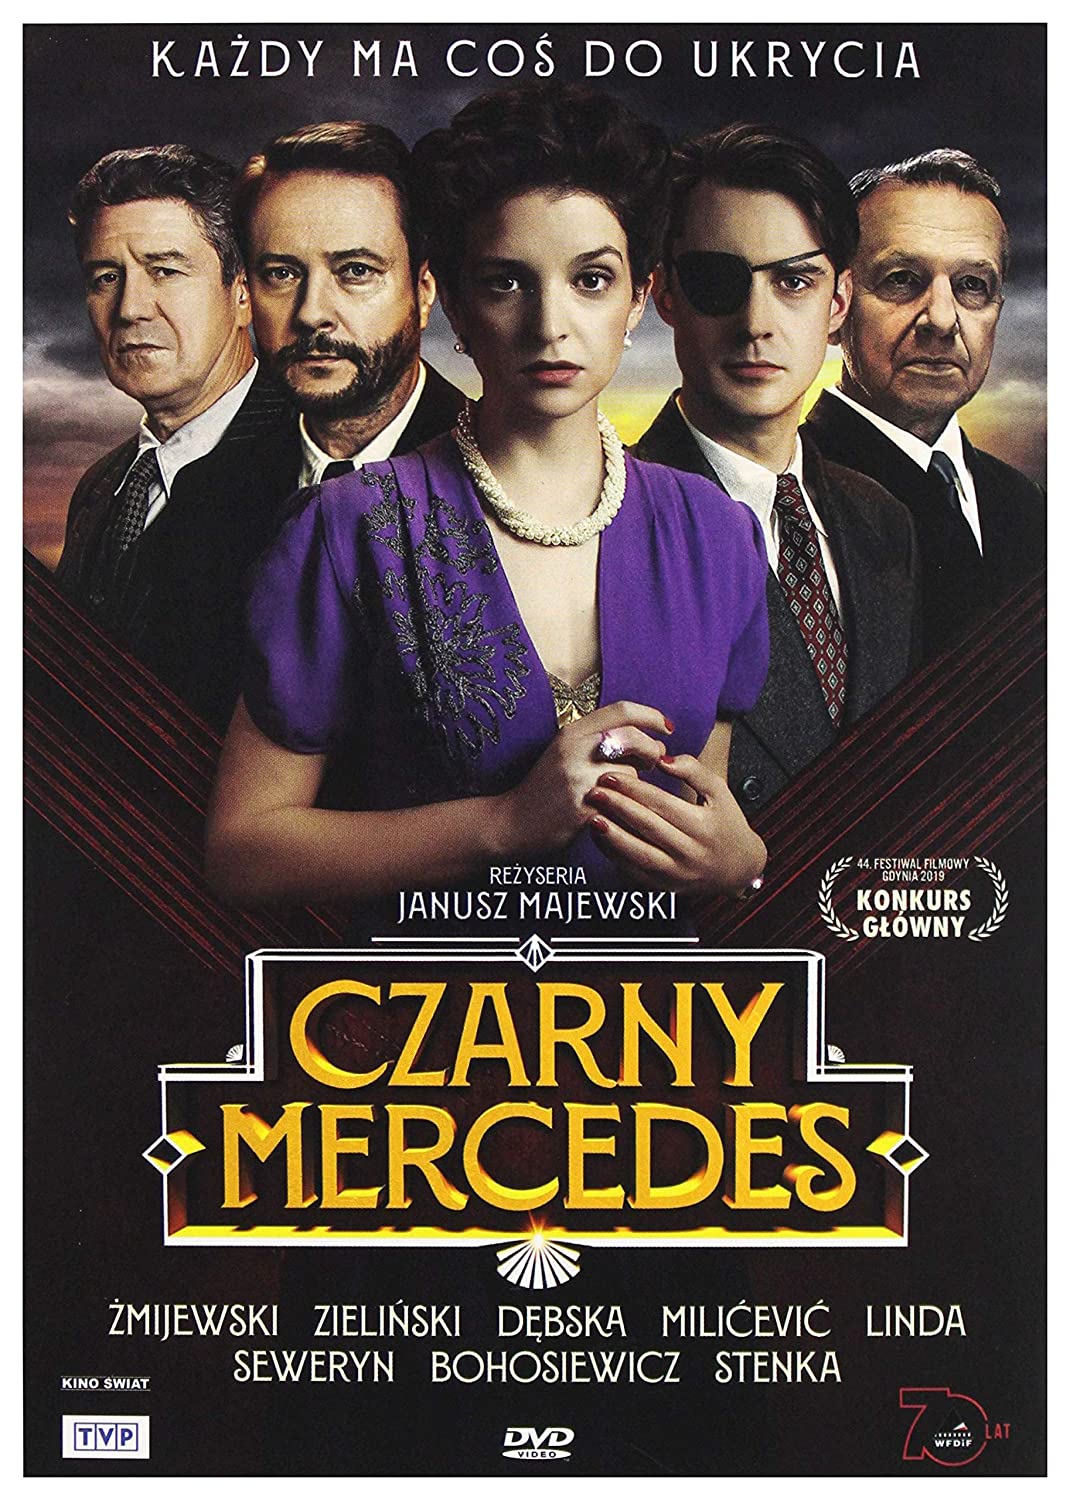 Stiahni si Filmy CZ/SK dabing Cerny Mercedes/ Black Mercedes (2019)(CZ) = CSFD 63%